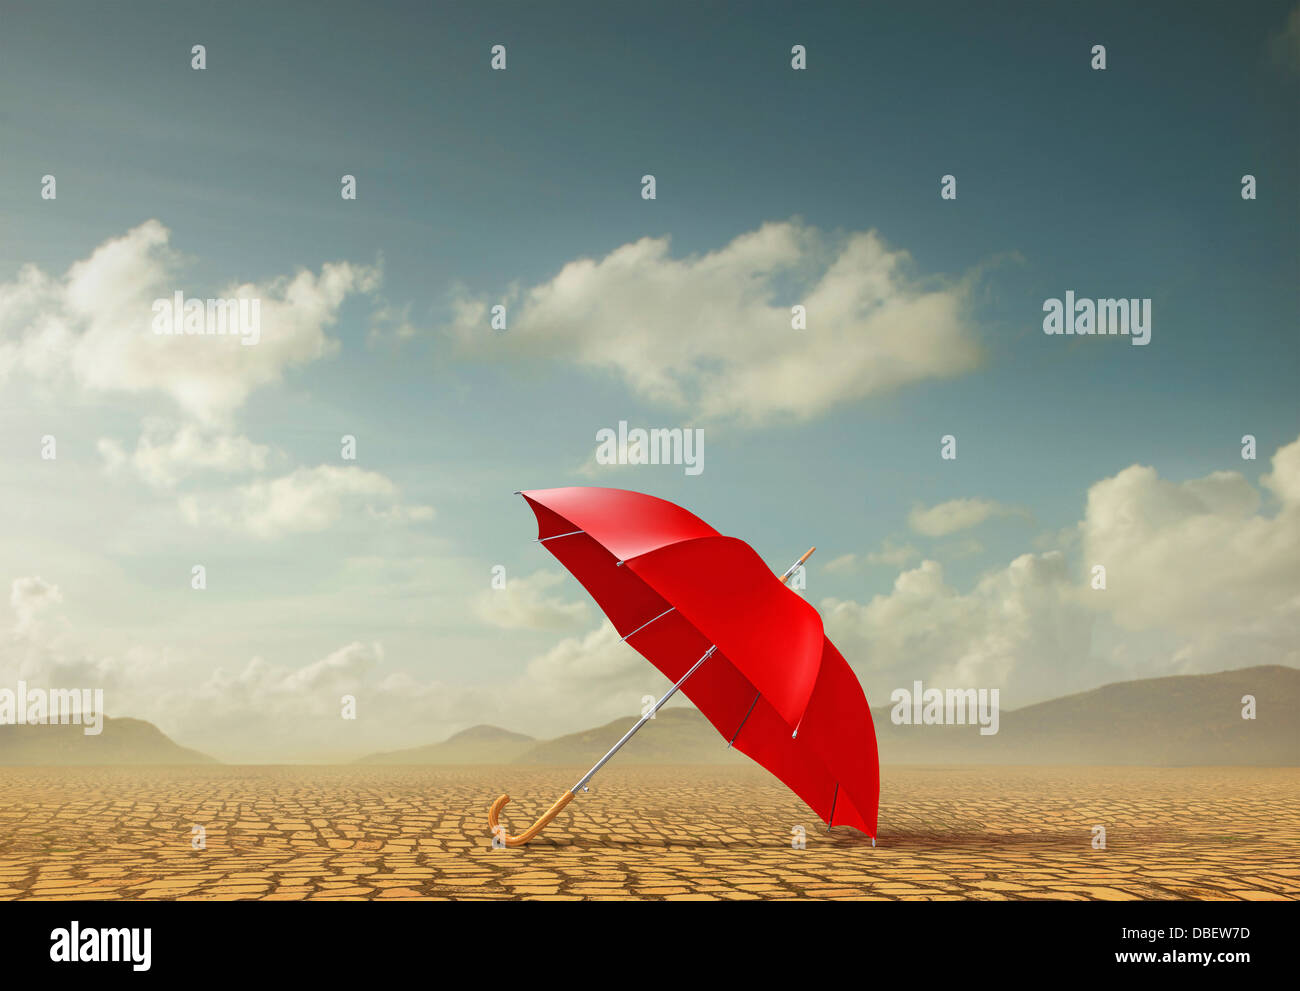 Red umbrella in desert landscape Stock Photo